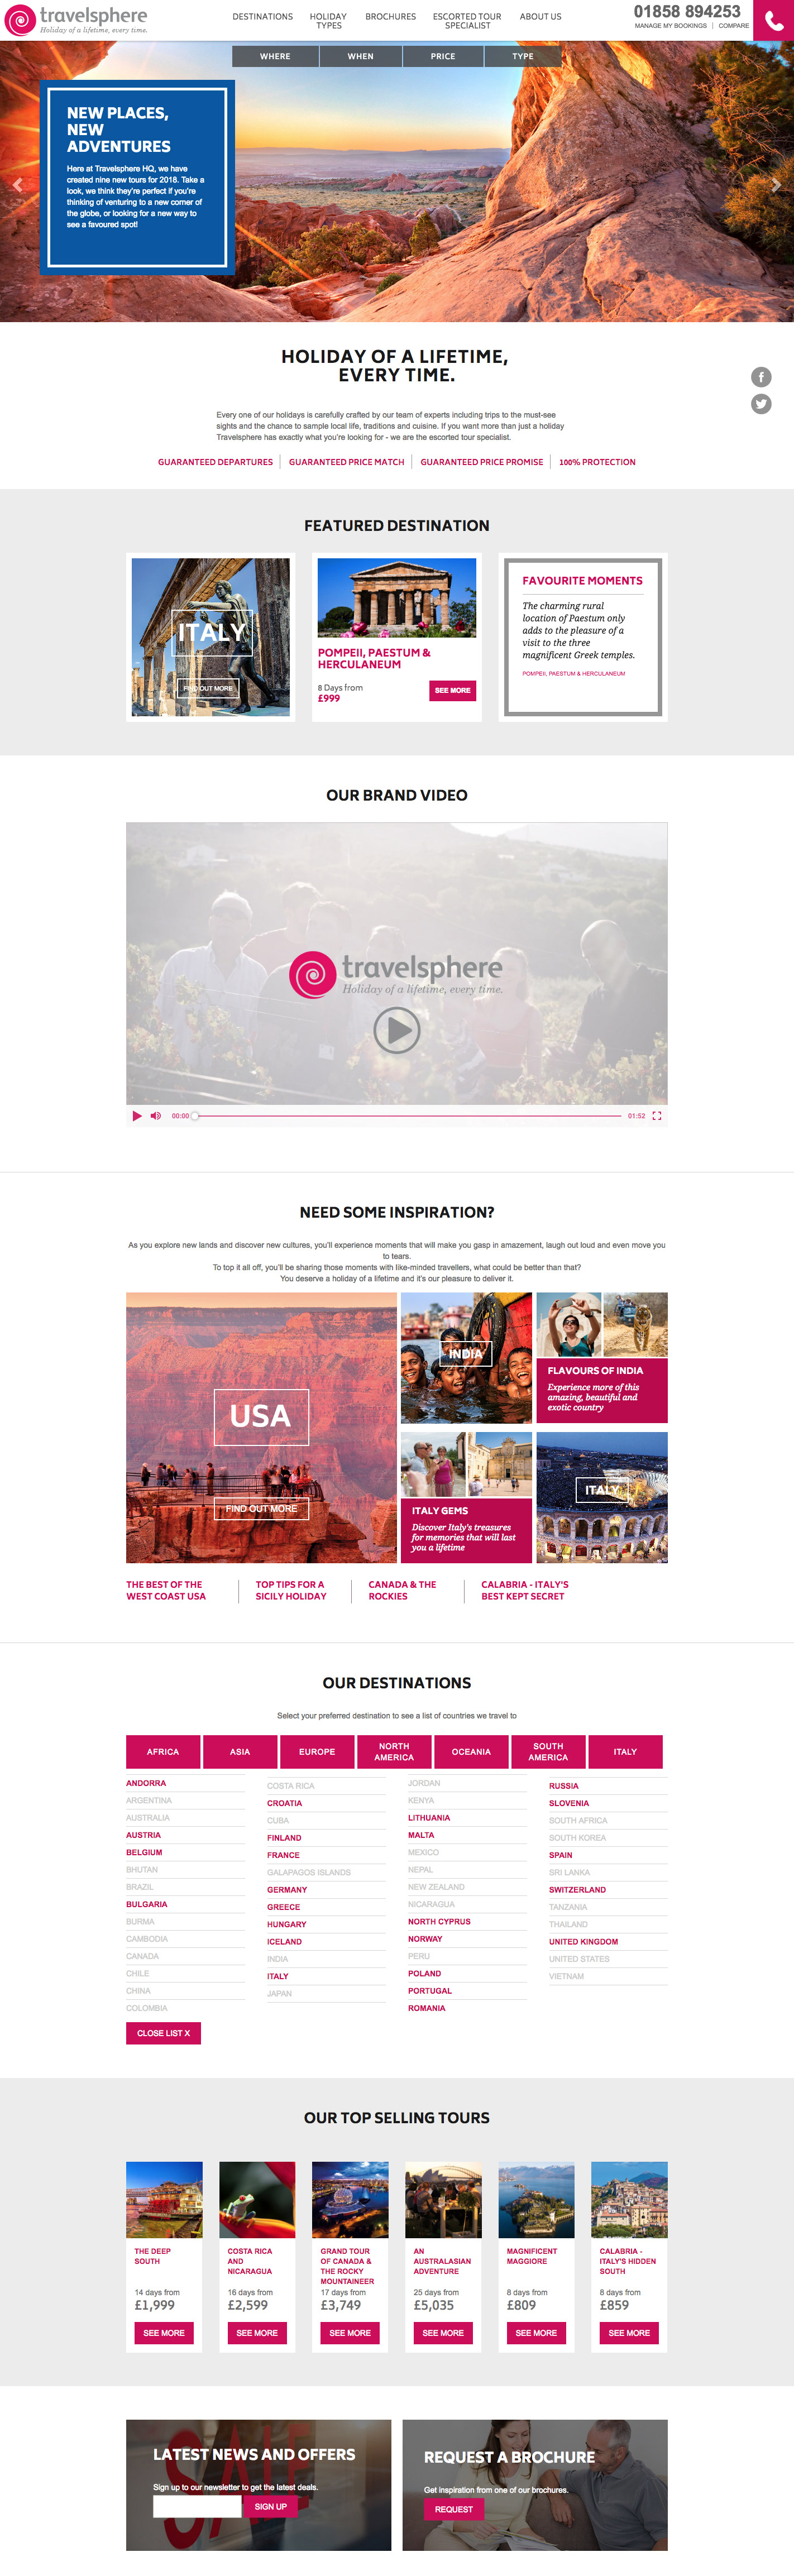 Travelsphere Re-brand Website build